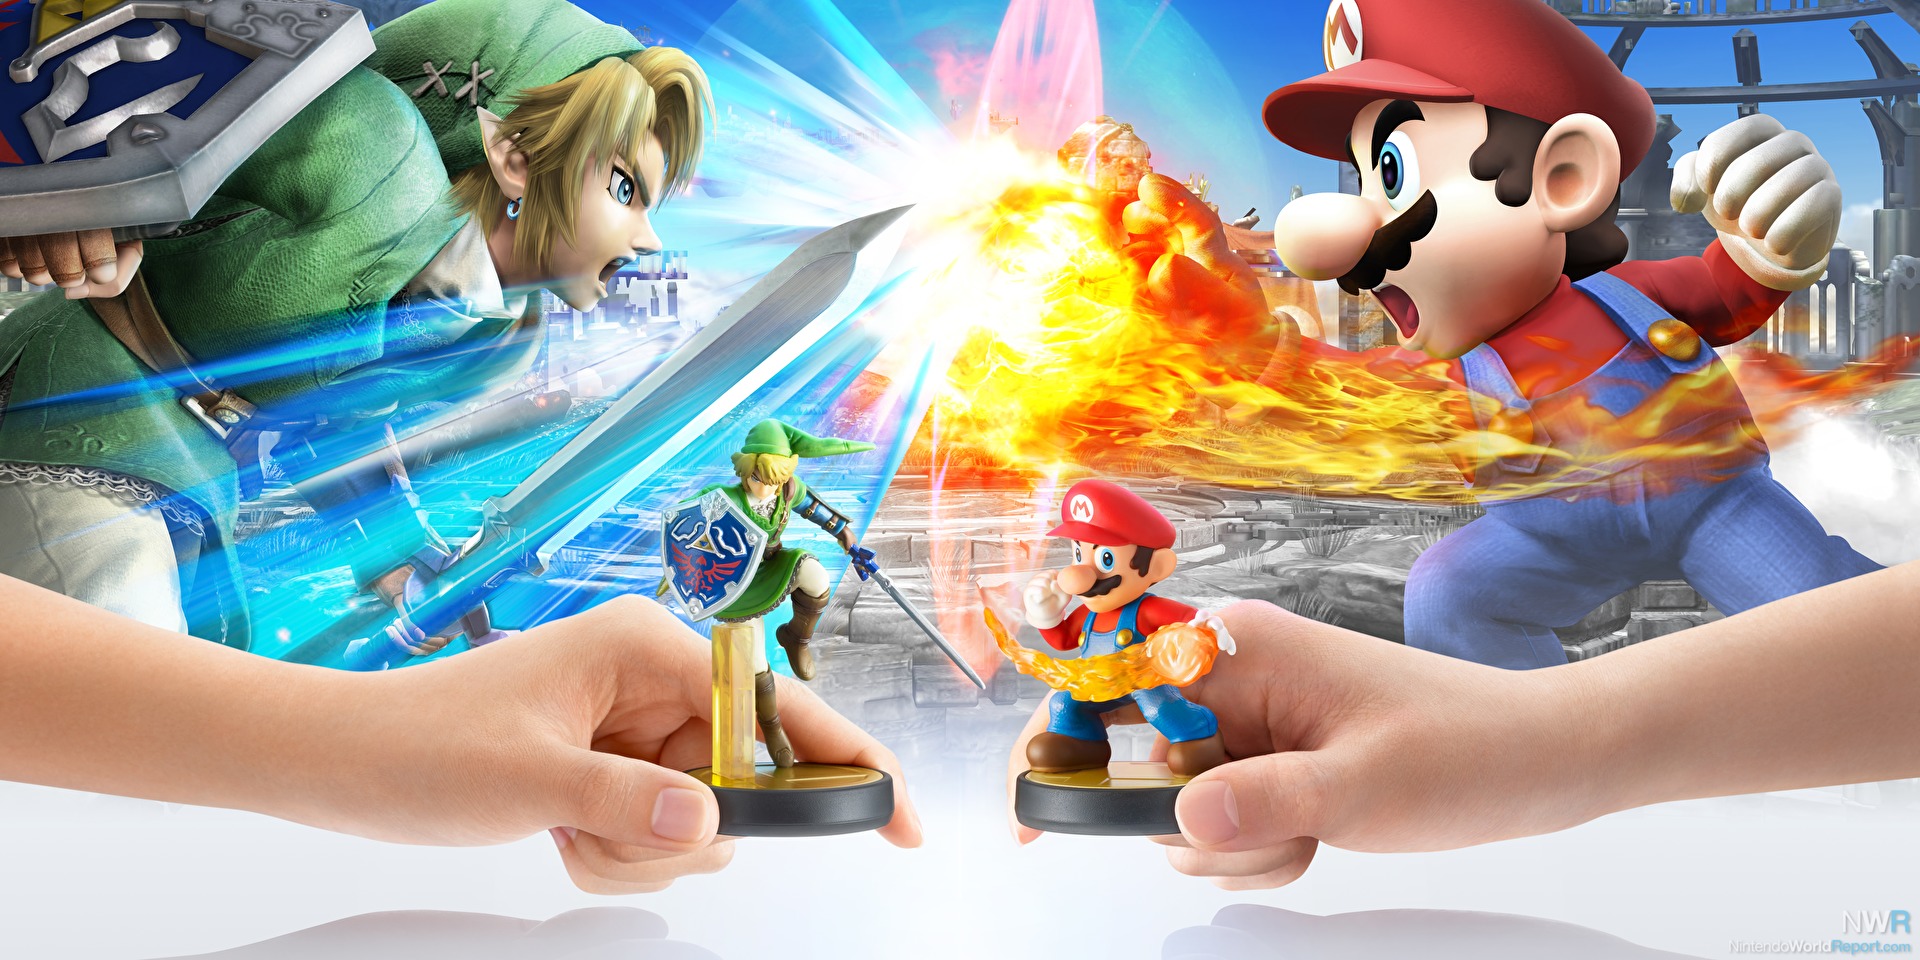 Super Smash Bros. for Wii U / Nintendo 3DS - Feature - Nintendo World Report